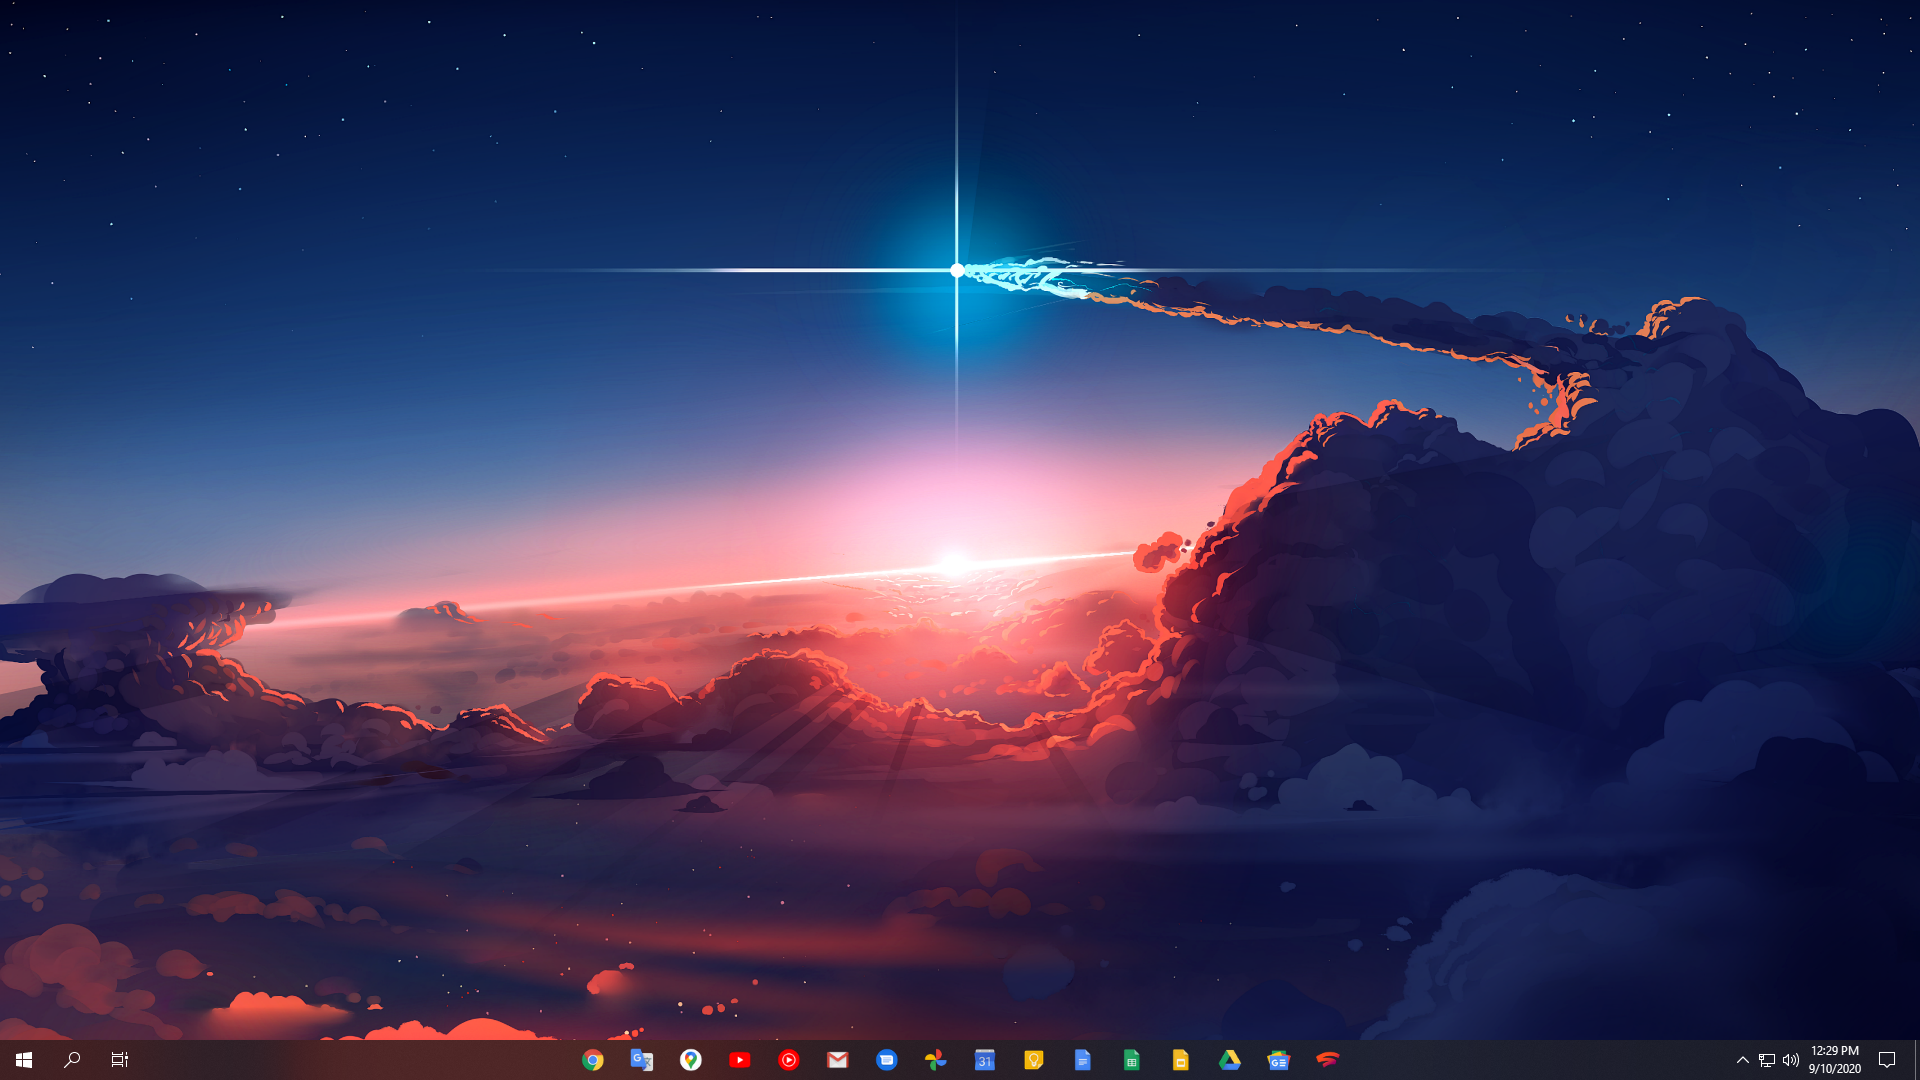 Finally happy with my clean desktop Windows10